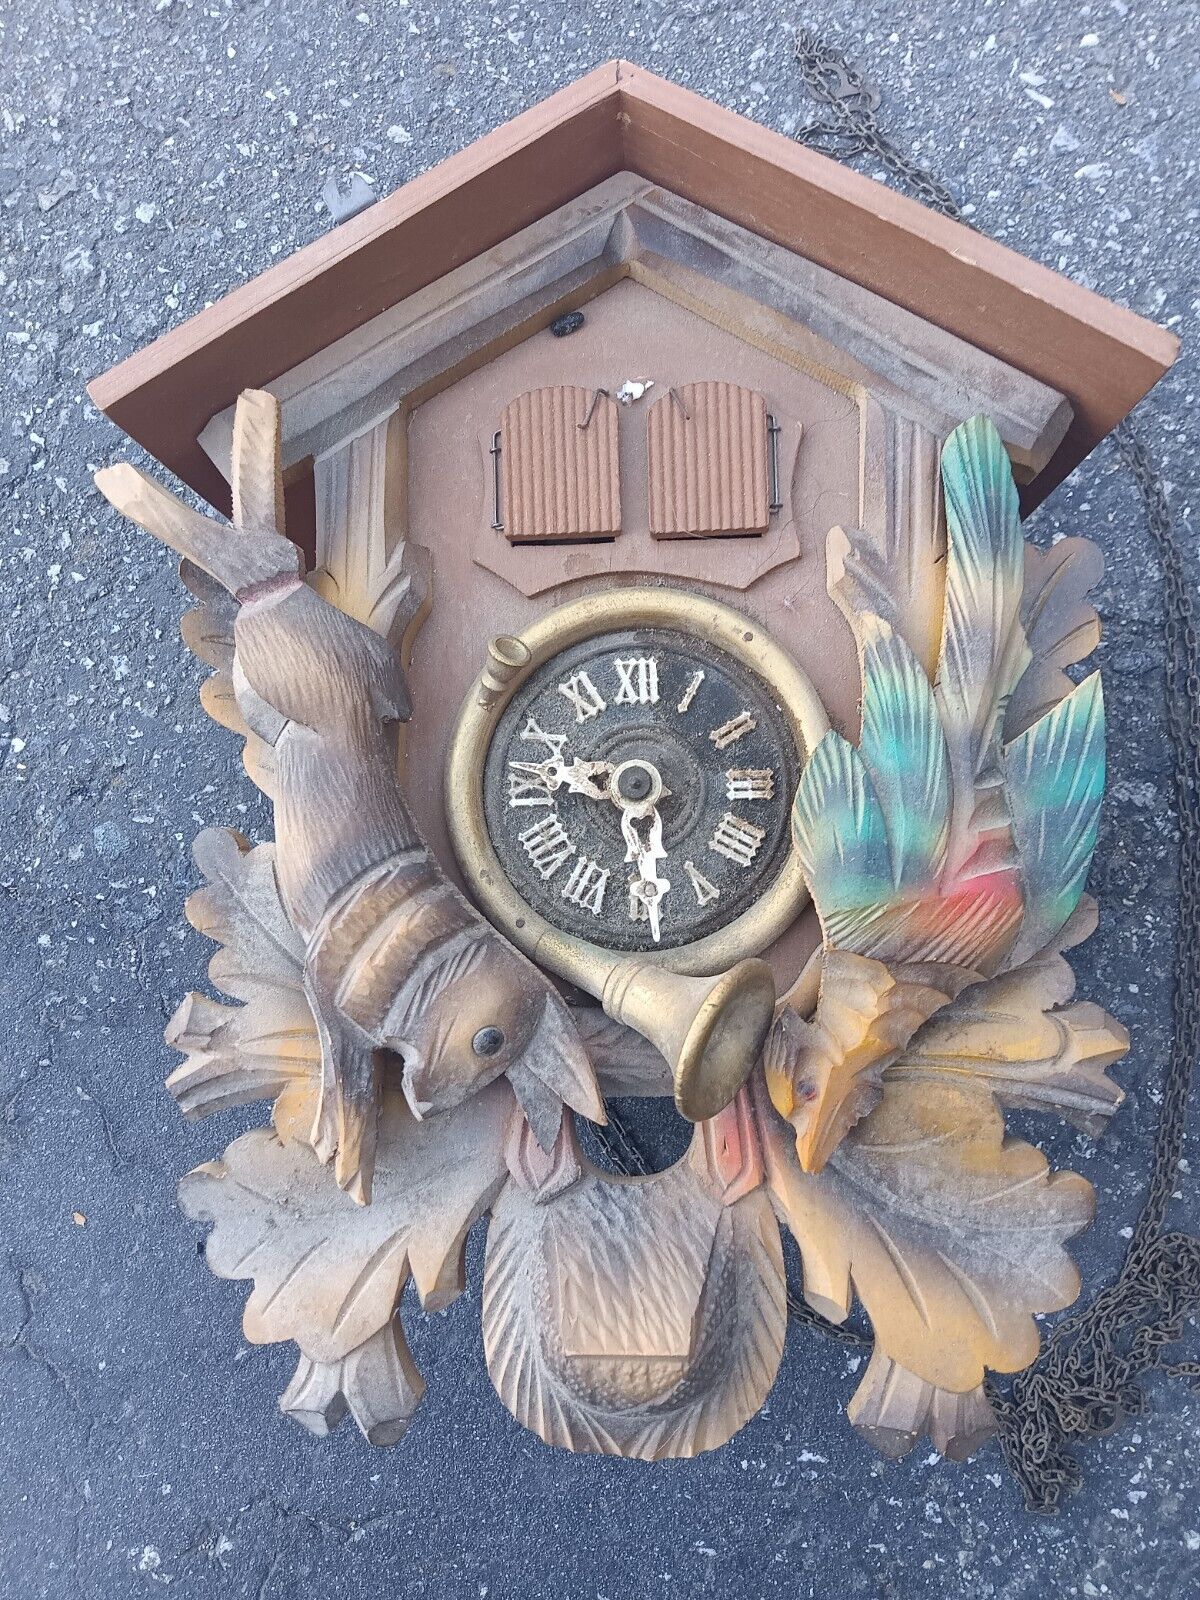 Rare & Vintage Thorens Hunter's Cuckoo clock, GC